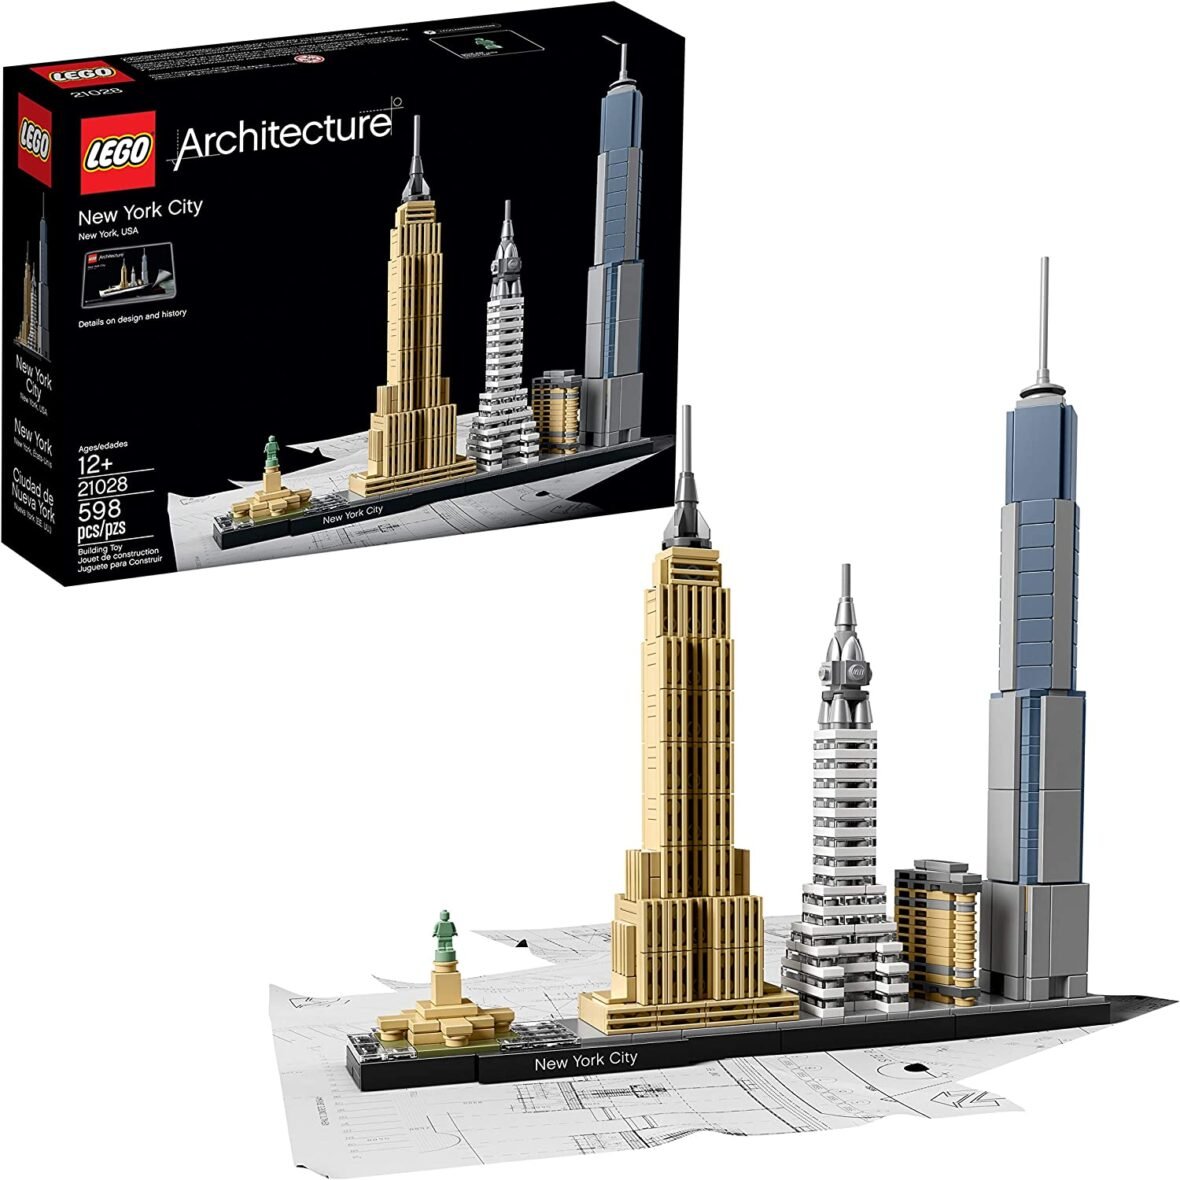 LEGO Architecture New York City 21028, Build It Yourself New York Skyline Model Kit (598 Pieces)